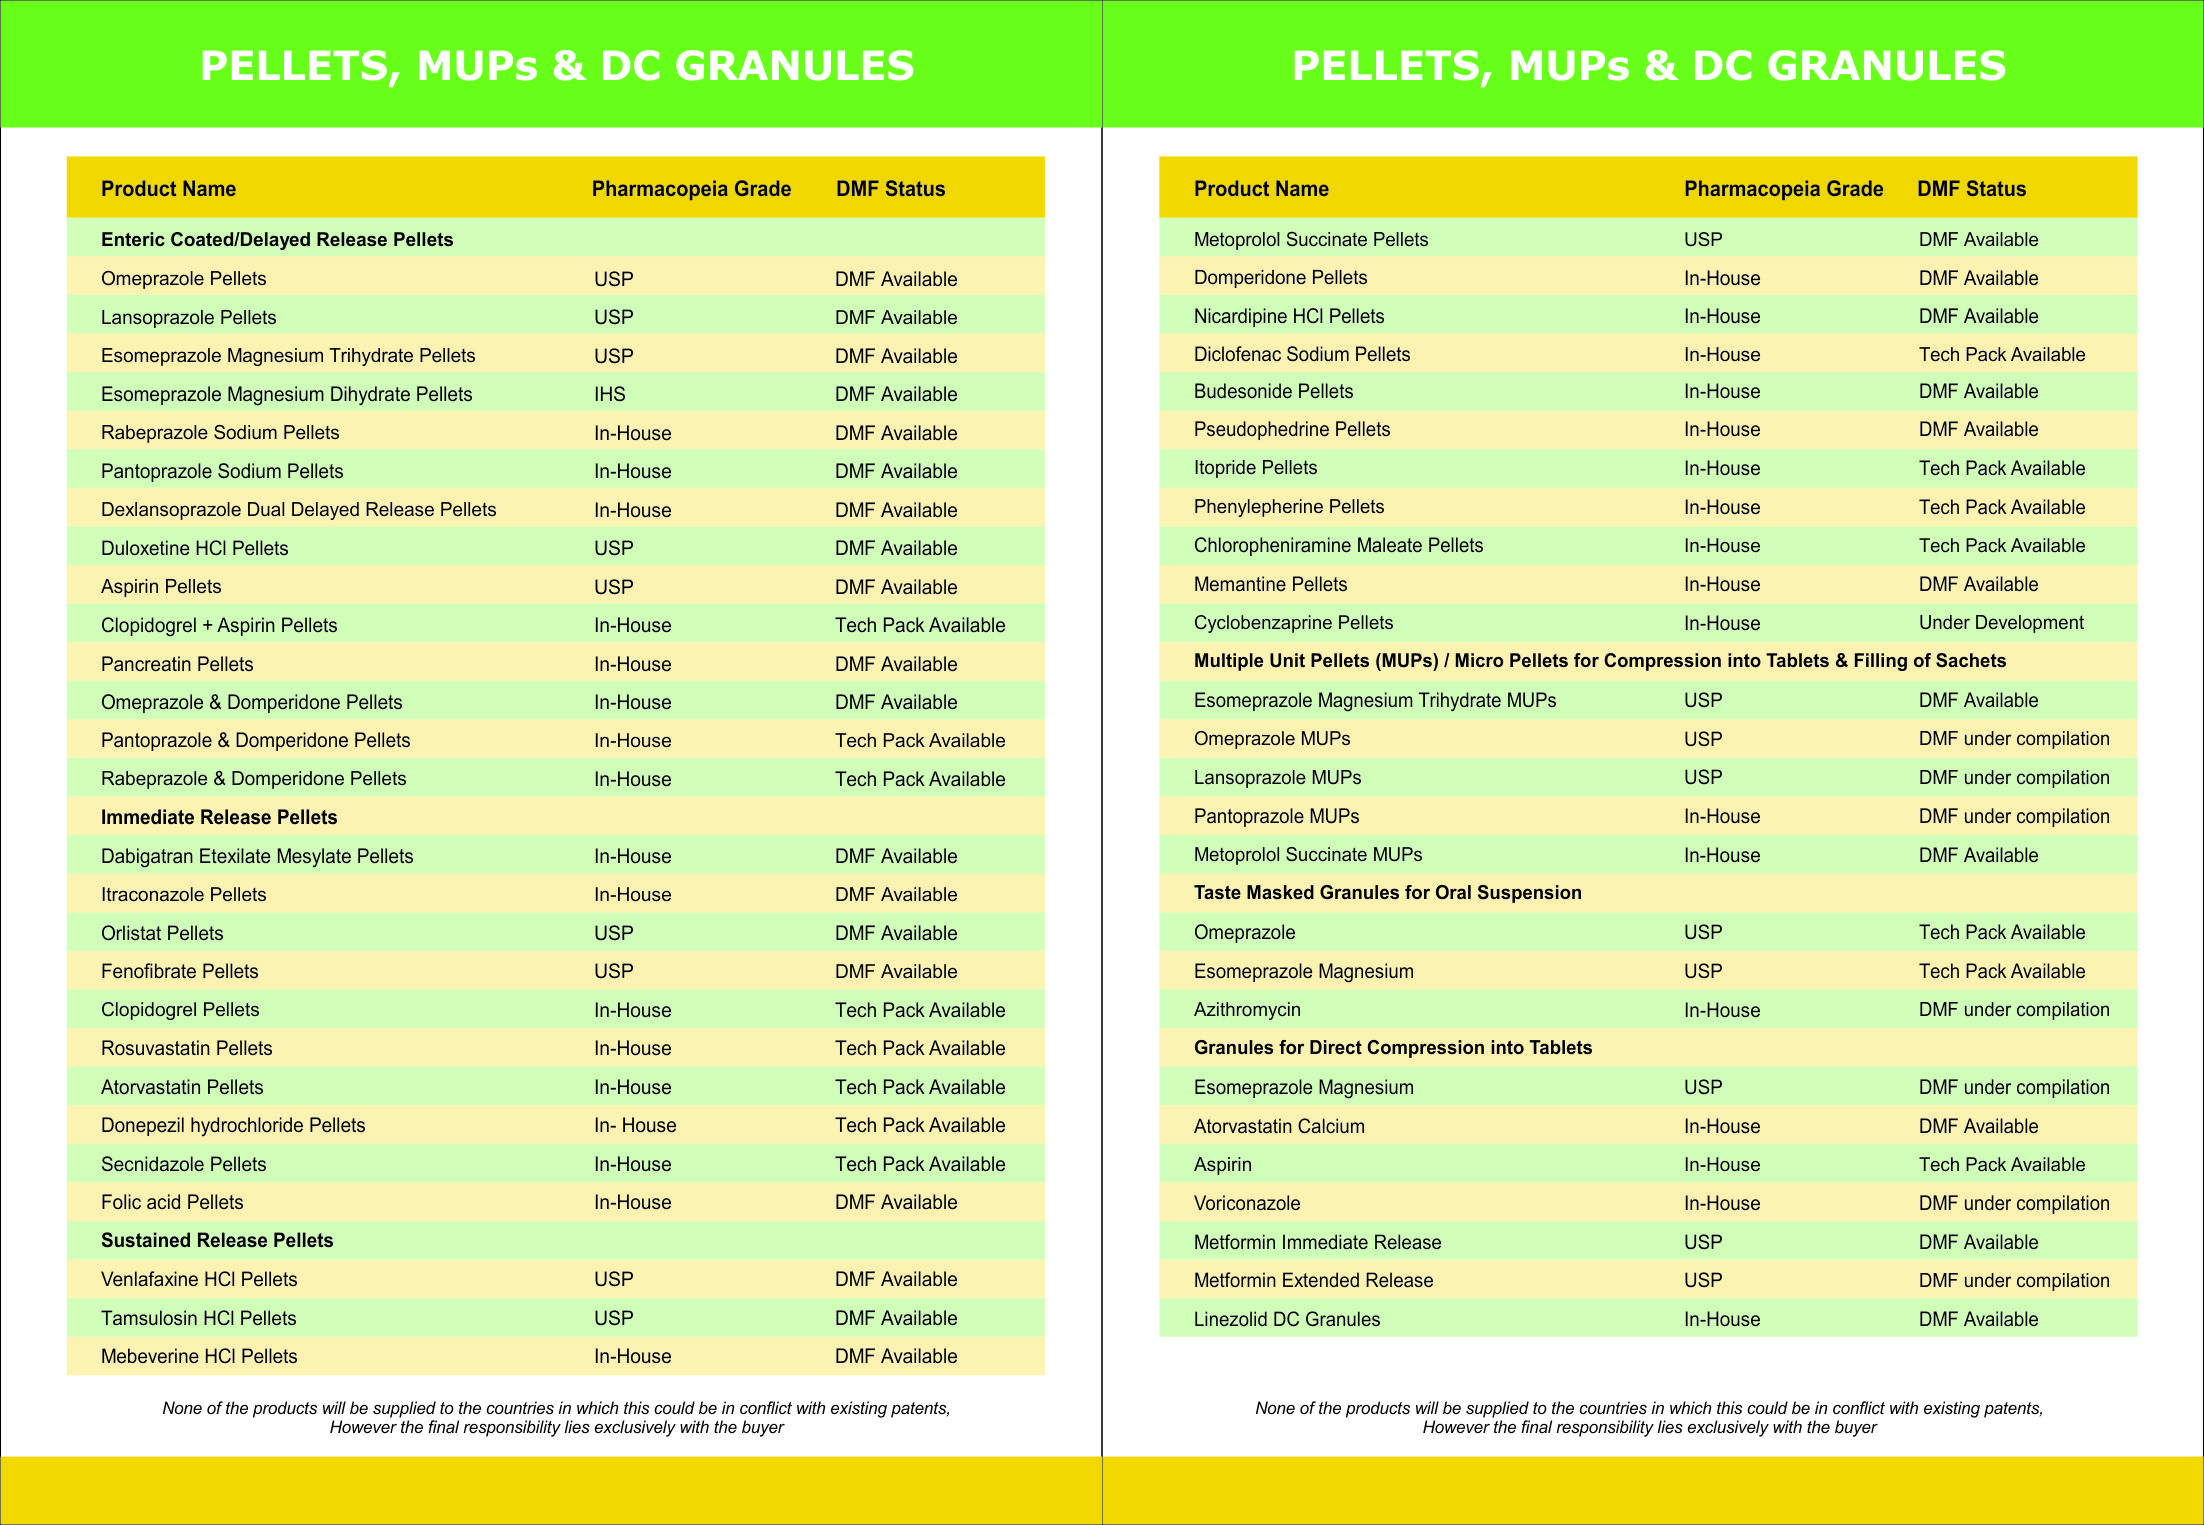 Pellets & Granules